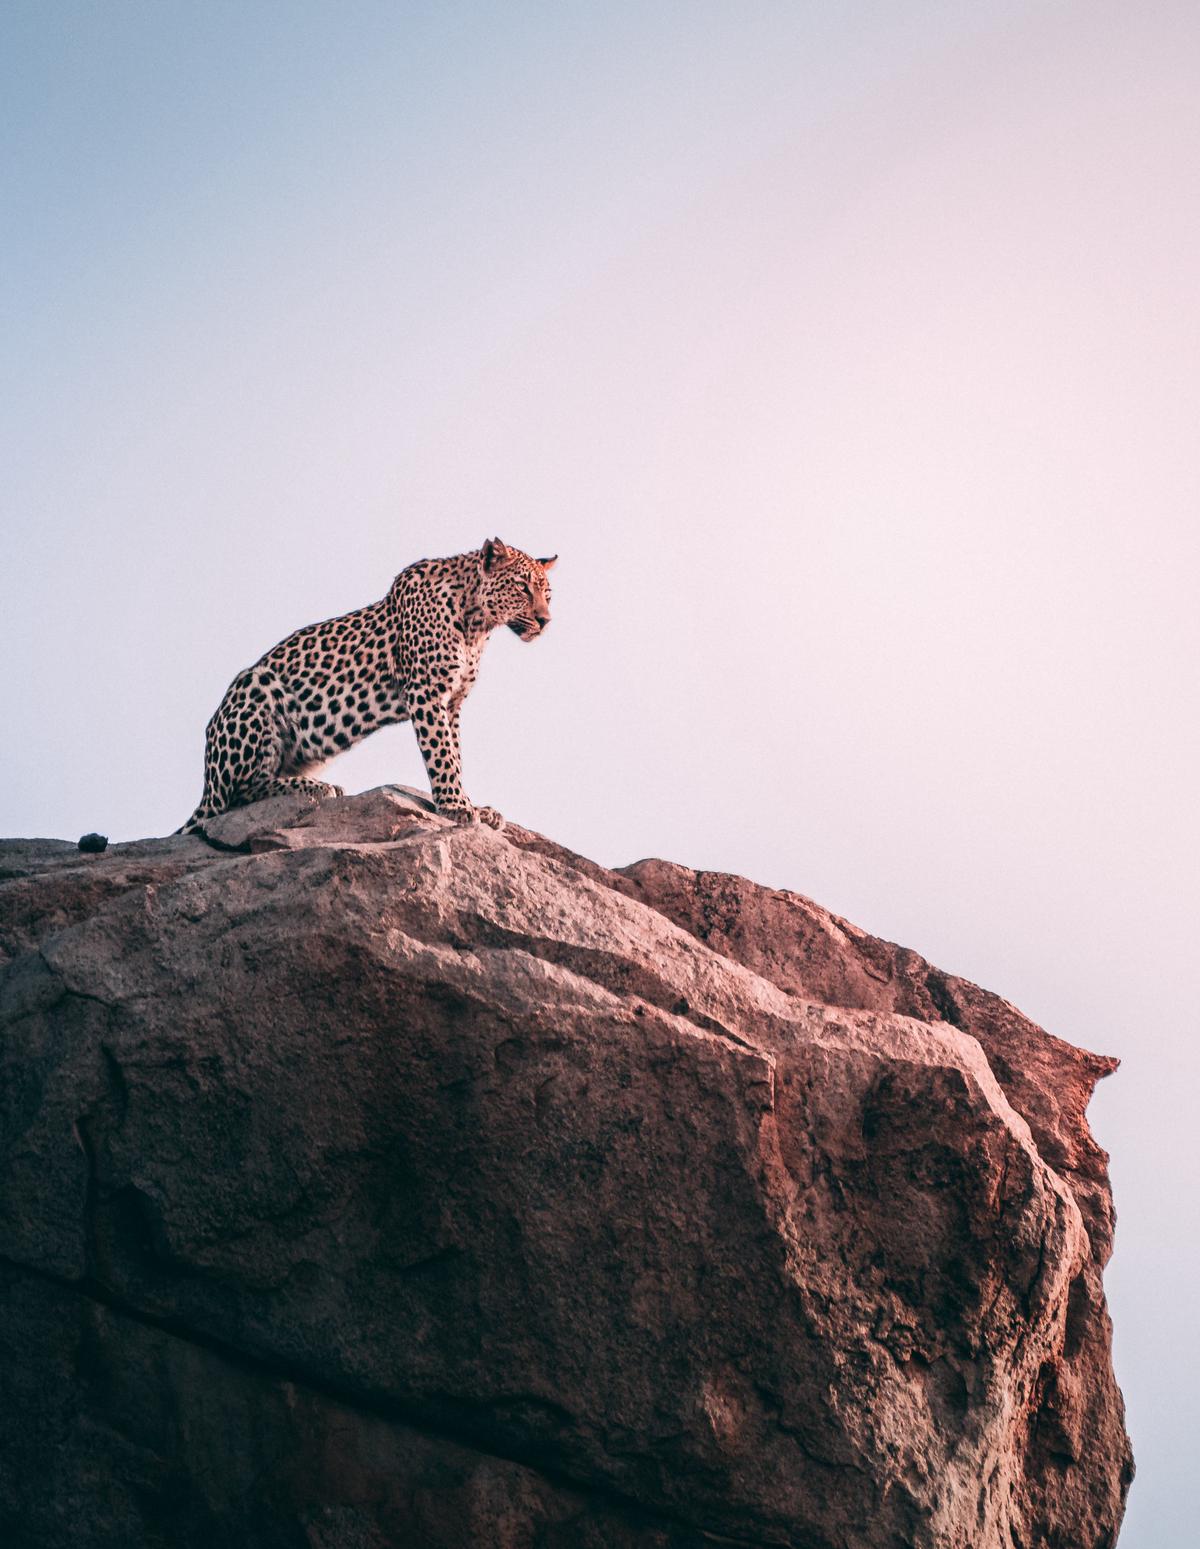 A majestic leopard in its natural habitat.